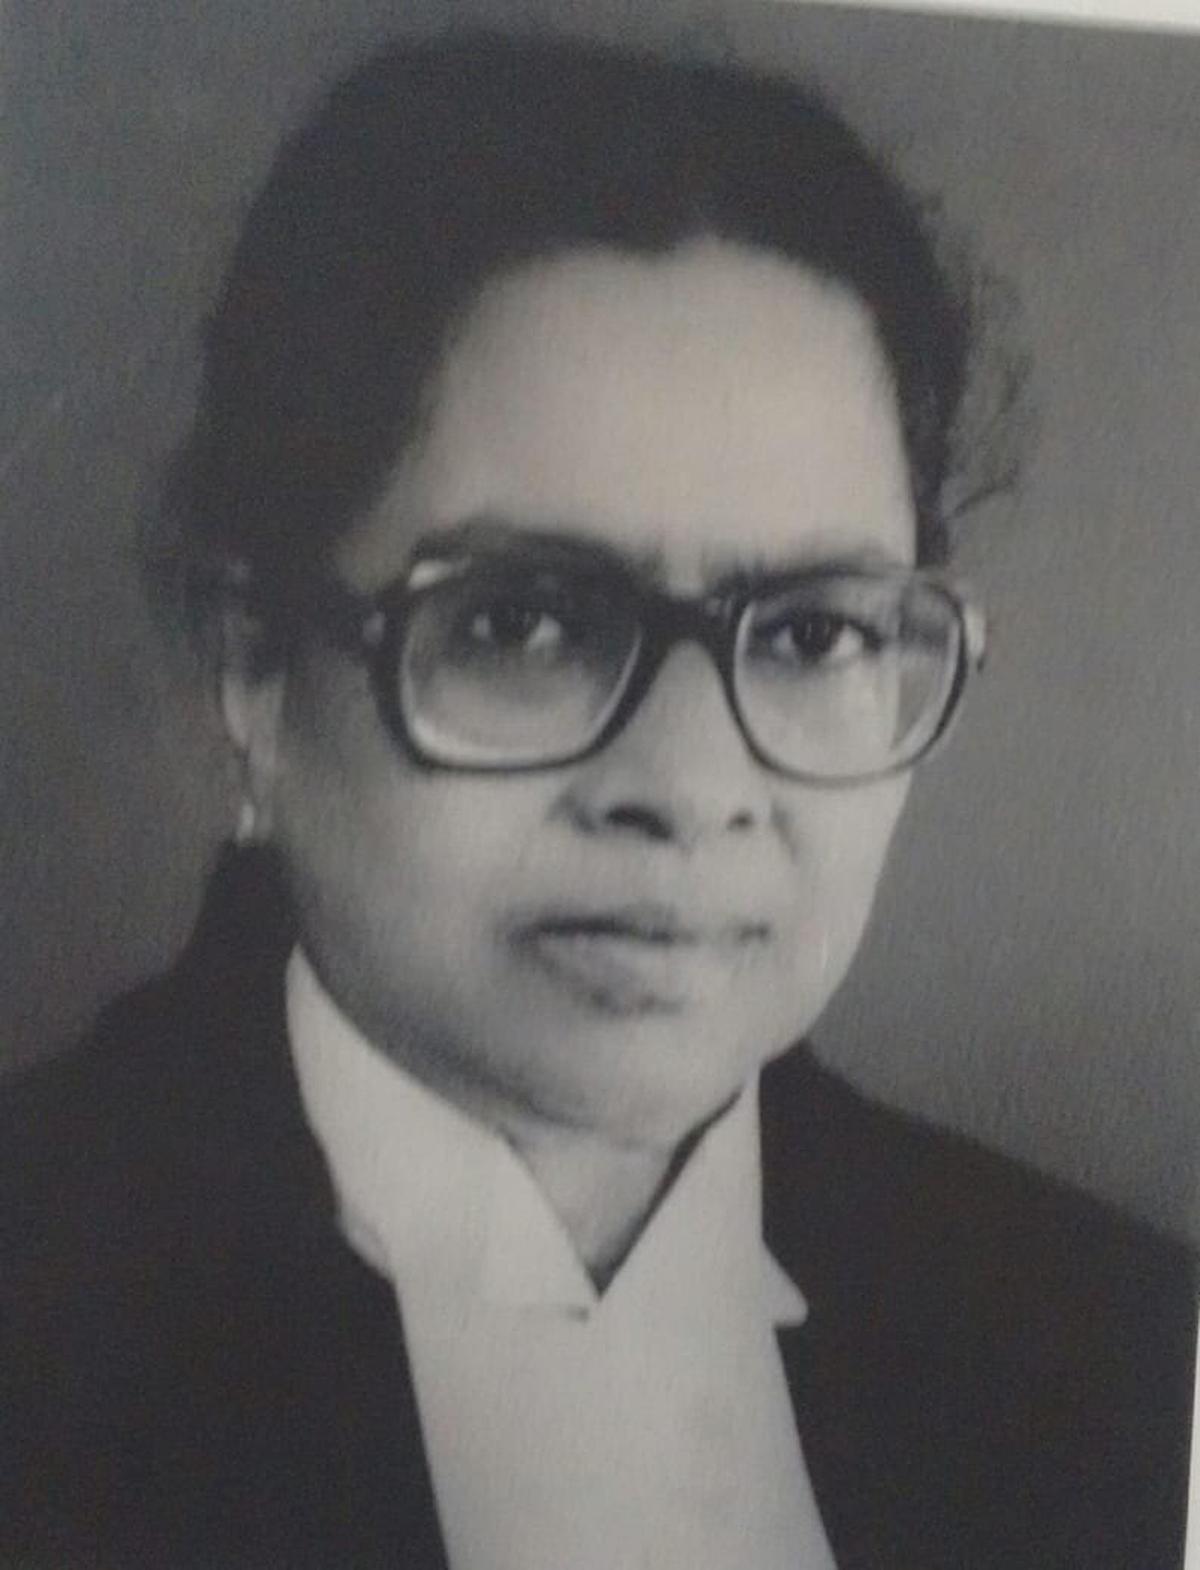 A photograph of Justice Fathima Beevi from Neethipathayile Dheera Vanitha, a documentary directed by Priya Ravindran.